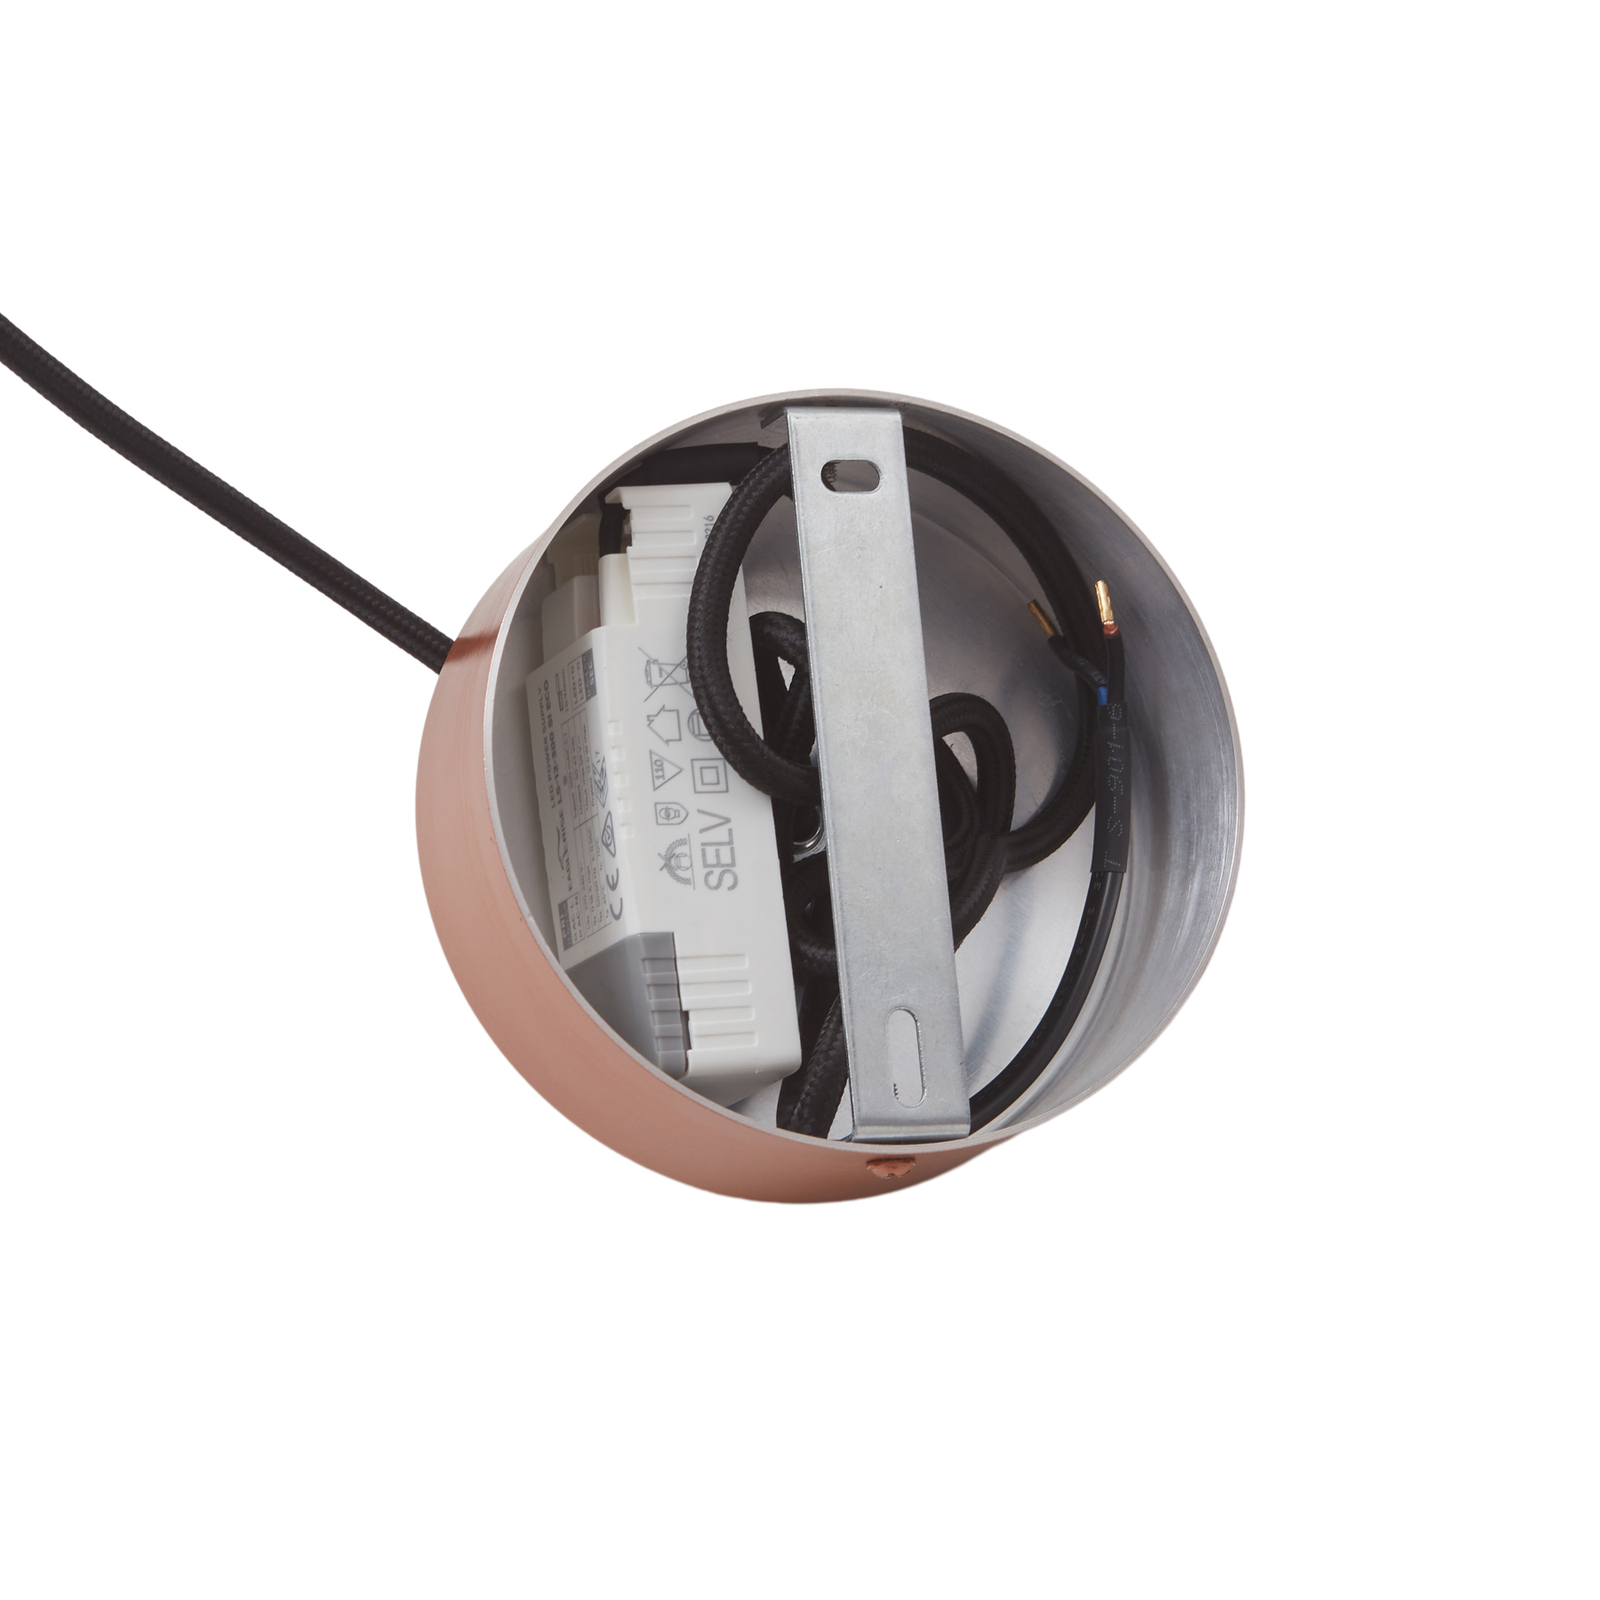 Lucande Nymara LED pendant light, copper